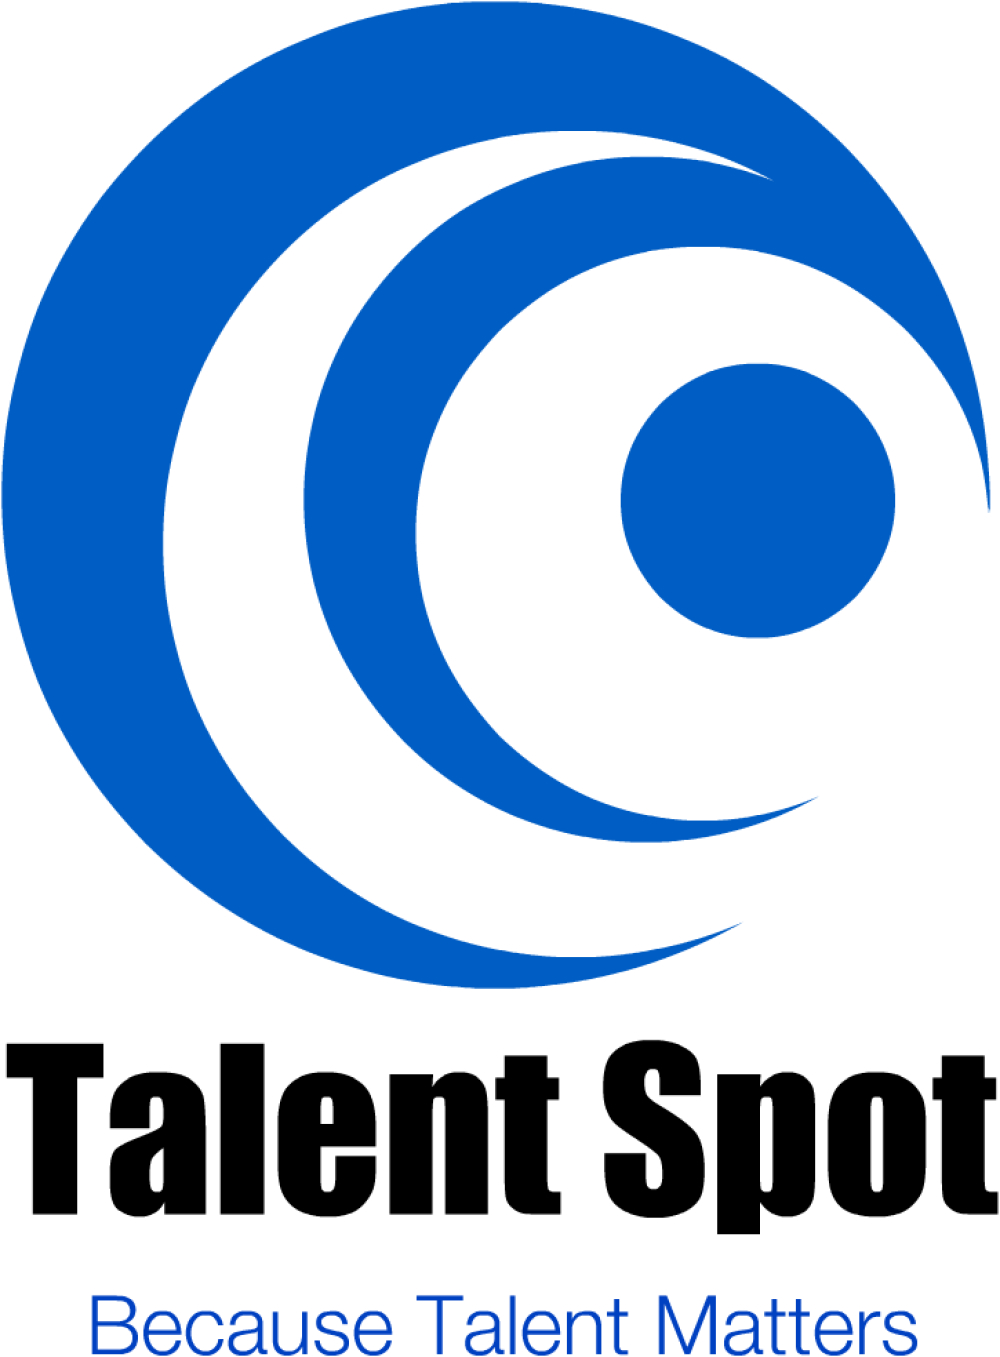 Talent Spot recruitment specialists